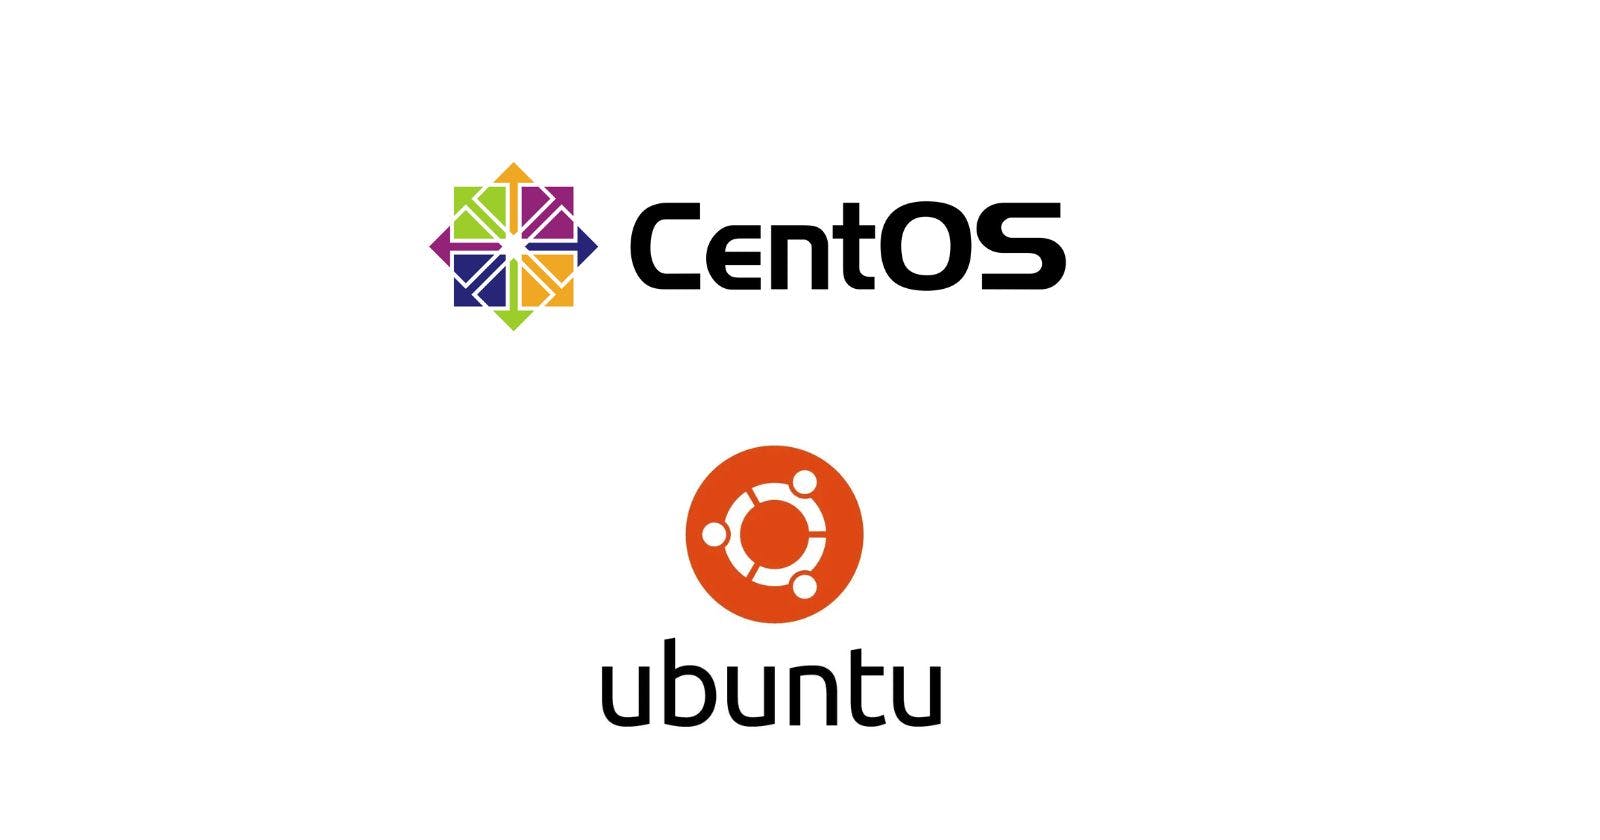 CentOS vs Ubuntu: How Do These Linux Distributions Compare?